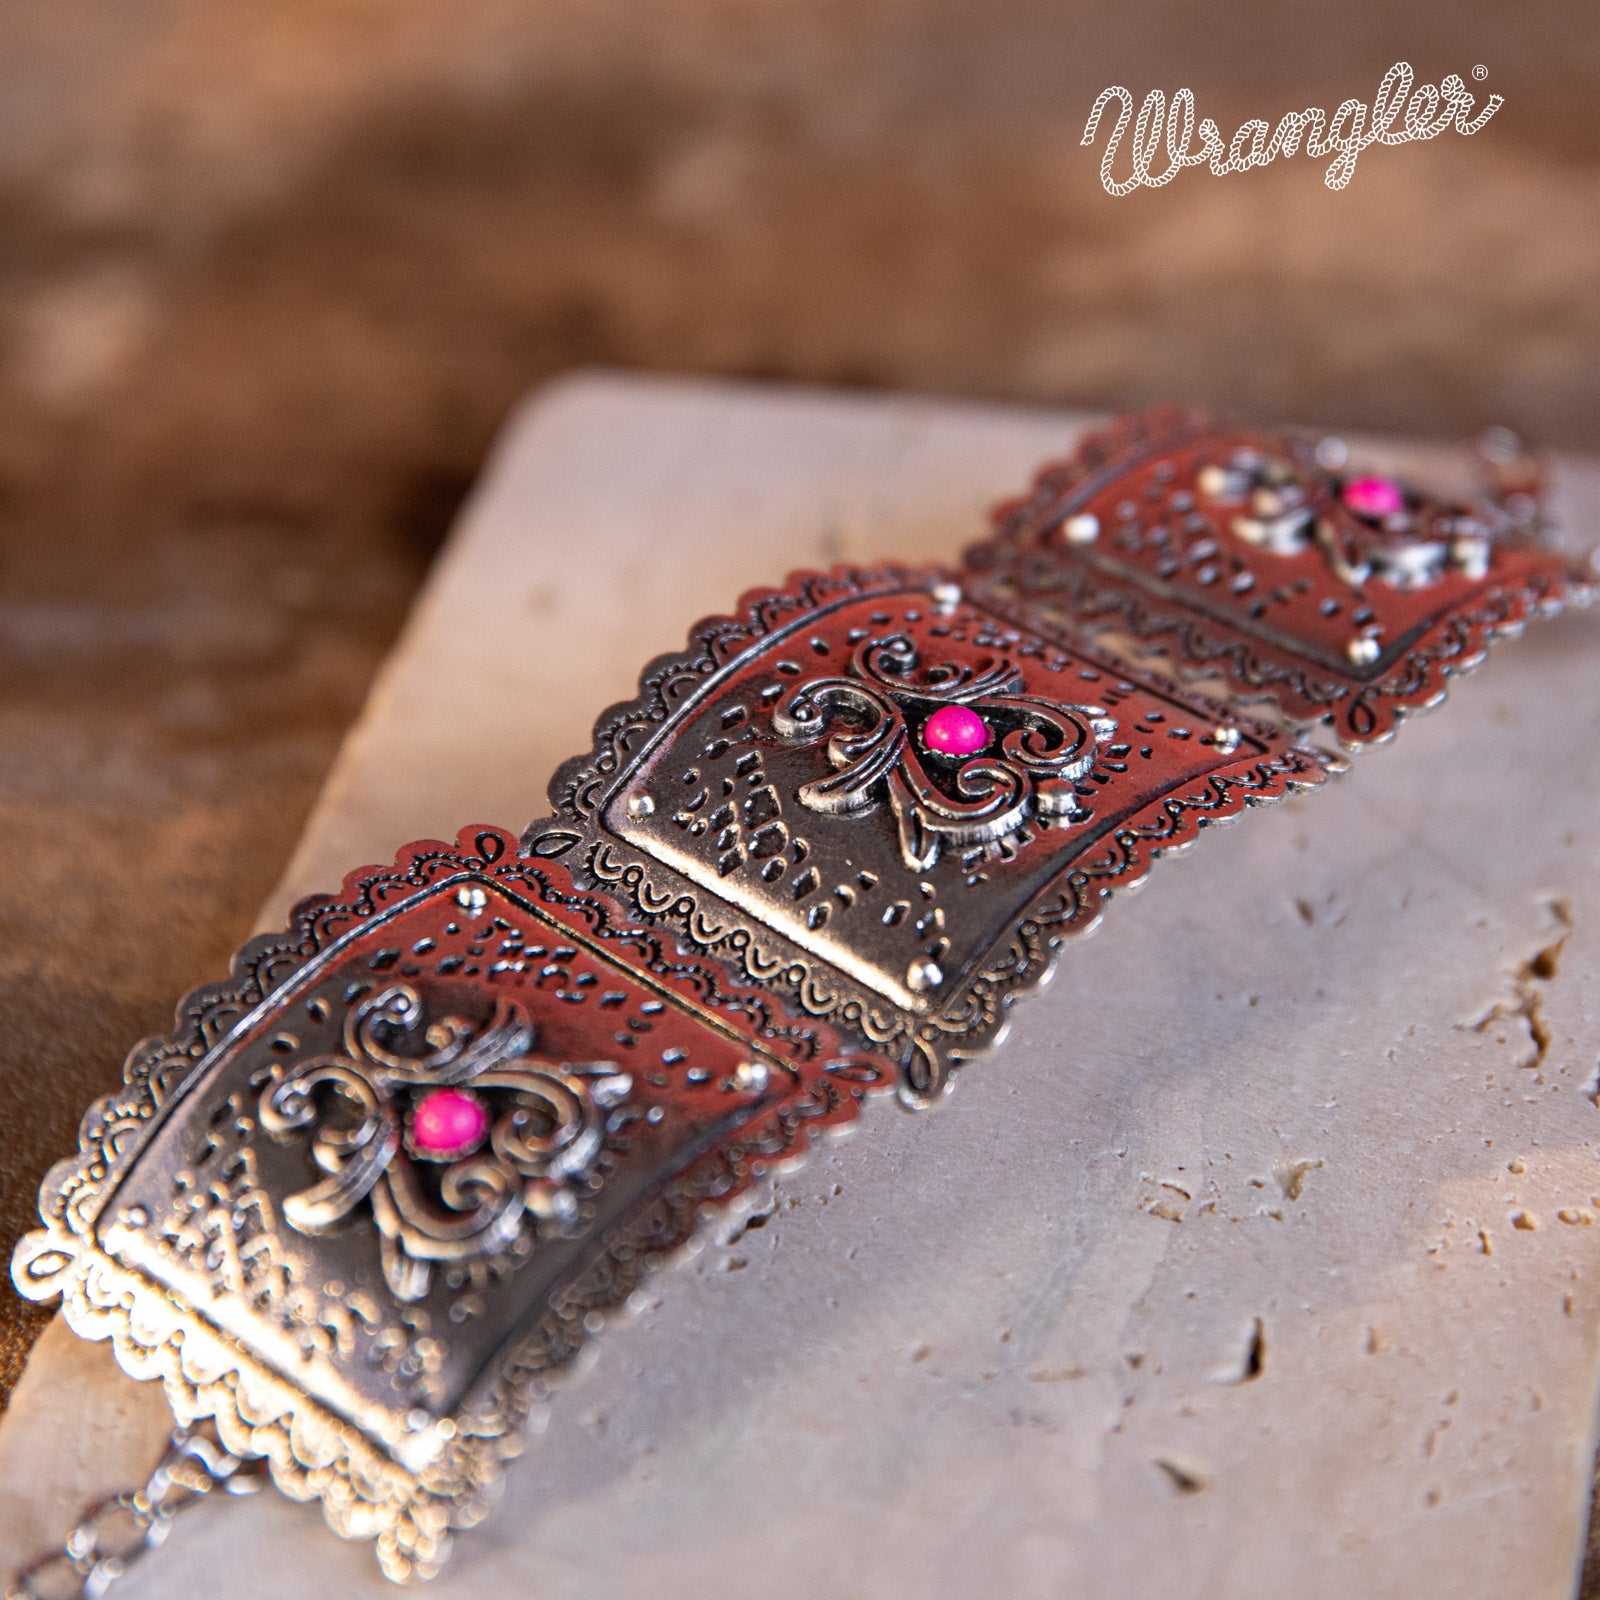 Wrangler  Silver Chain Concho Cuff Bracelet Turquoise Stone - Cowgirl Wear